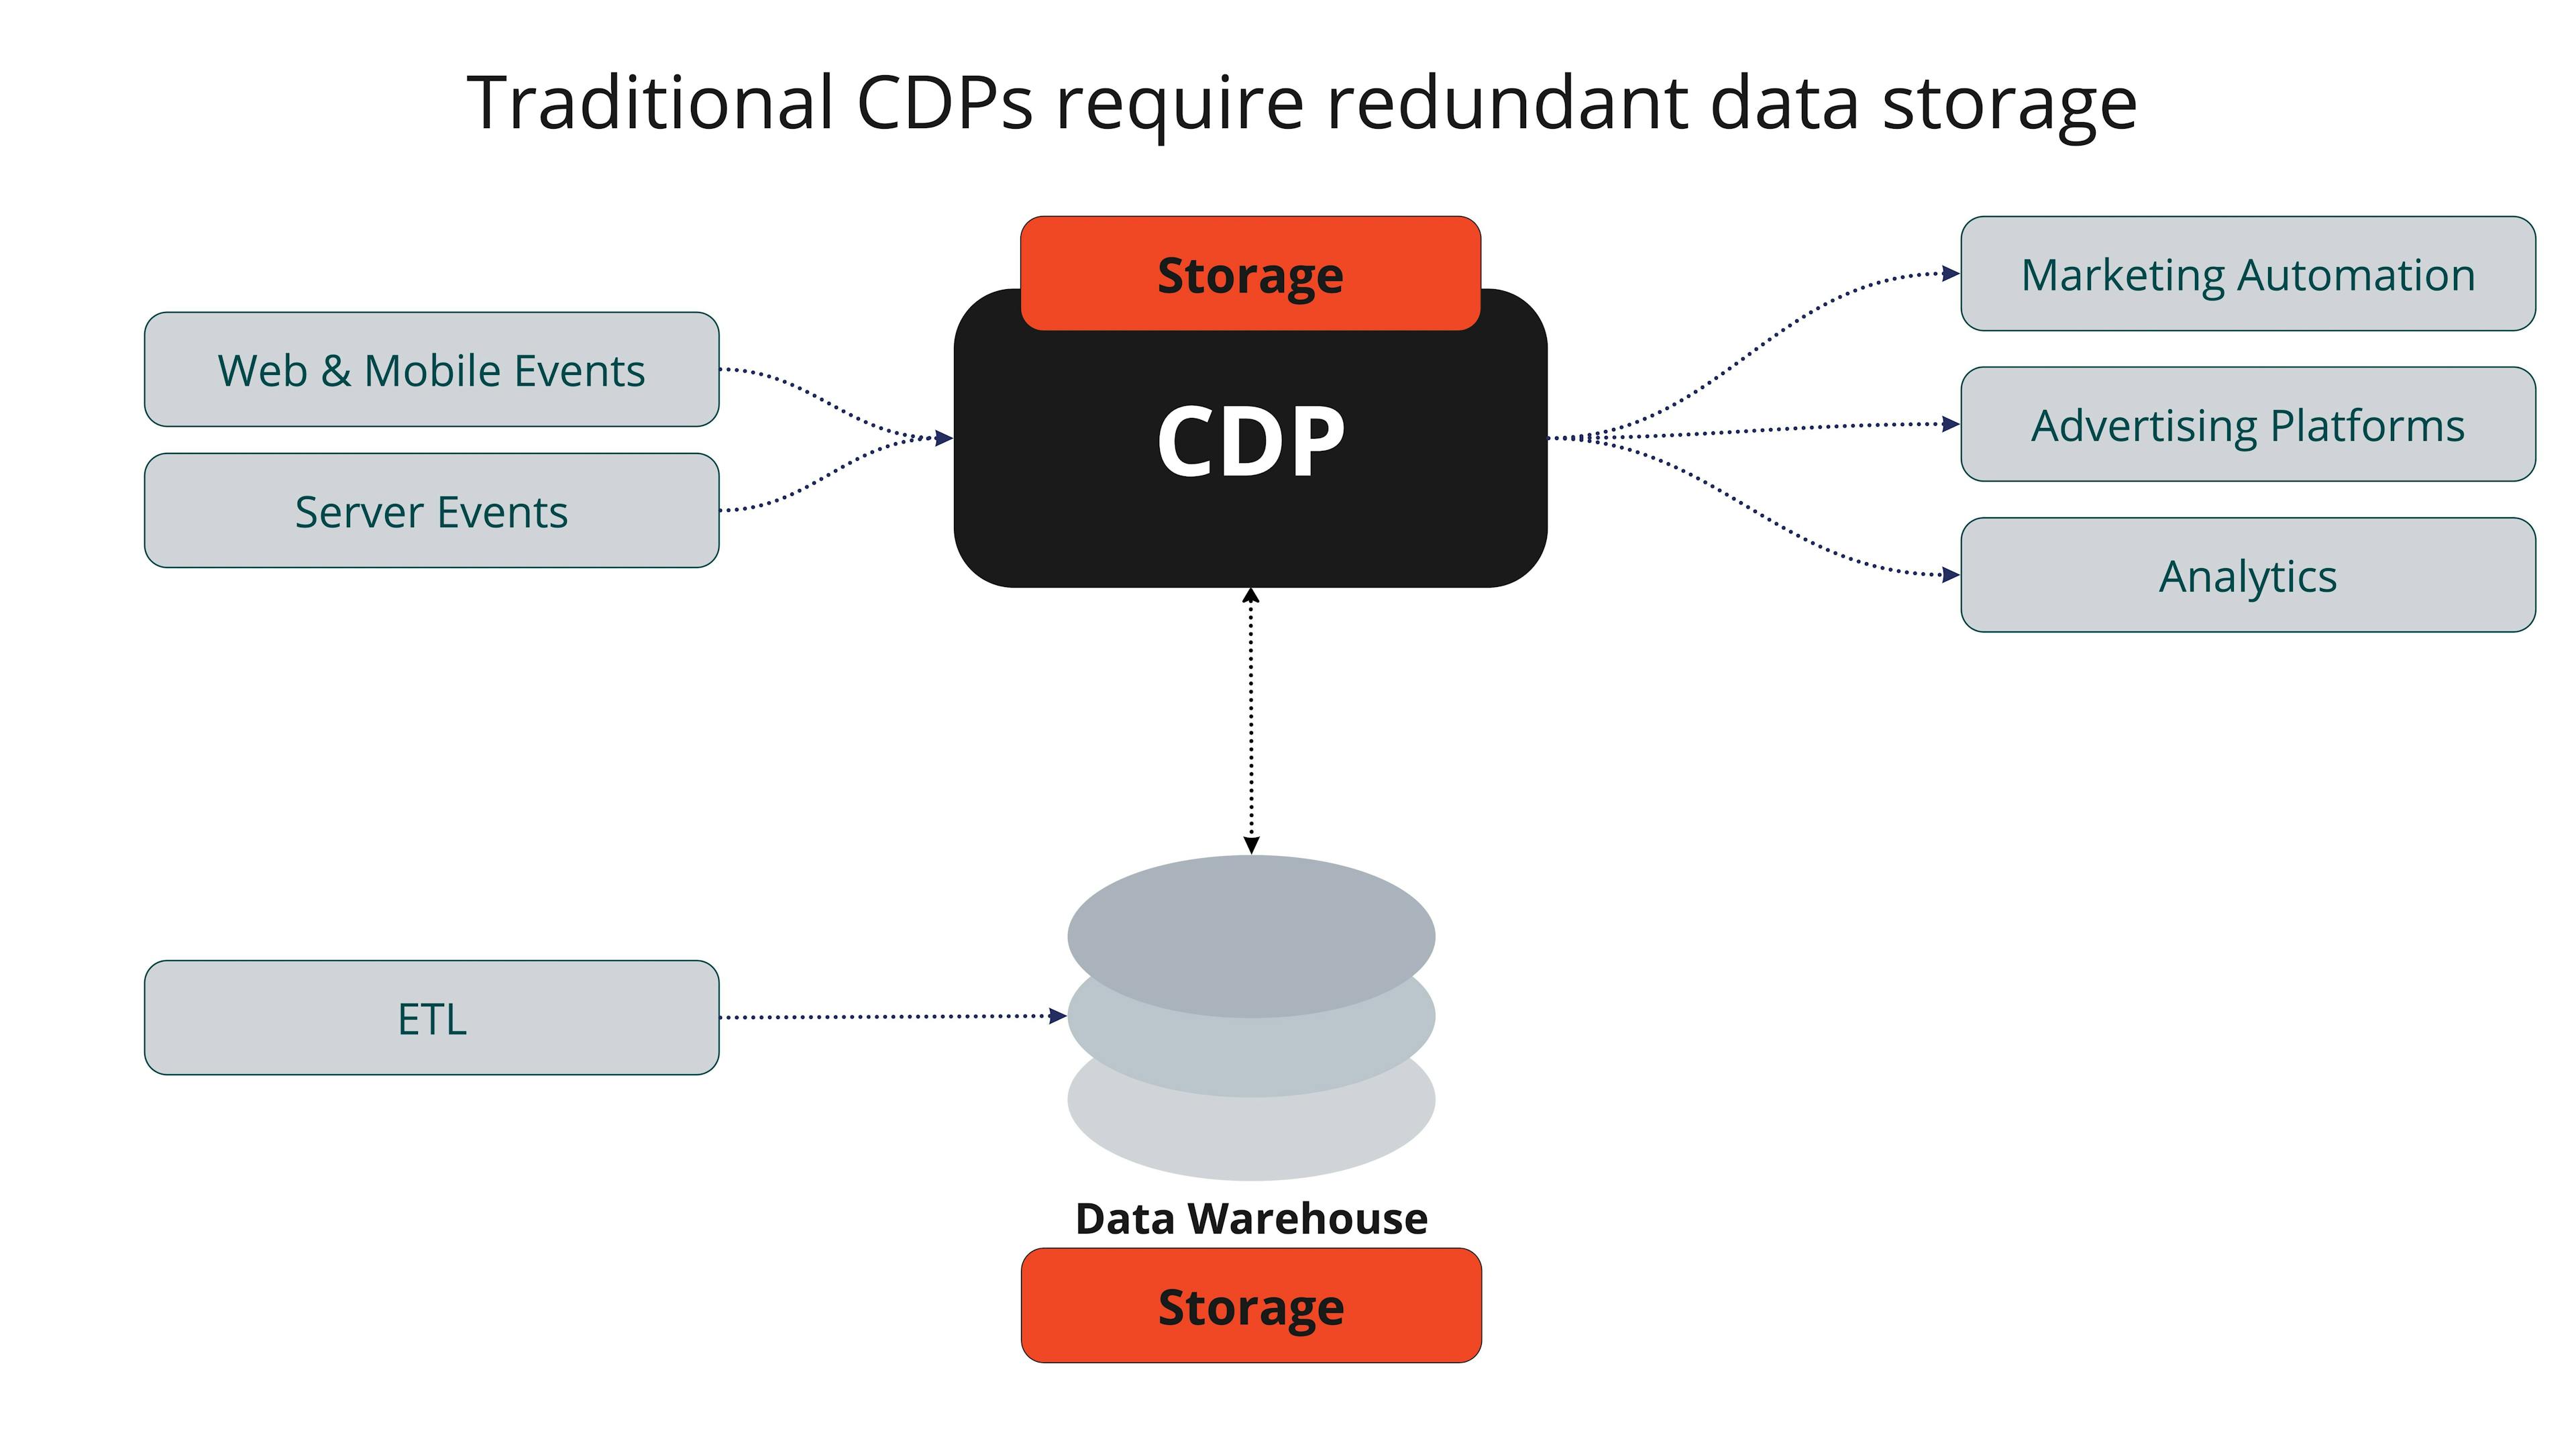 Traditional CDPs require redundant data storage